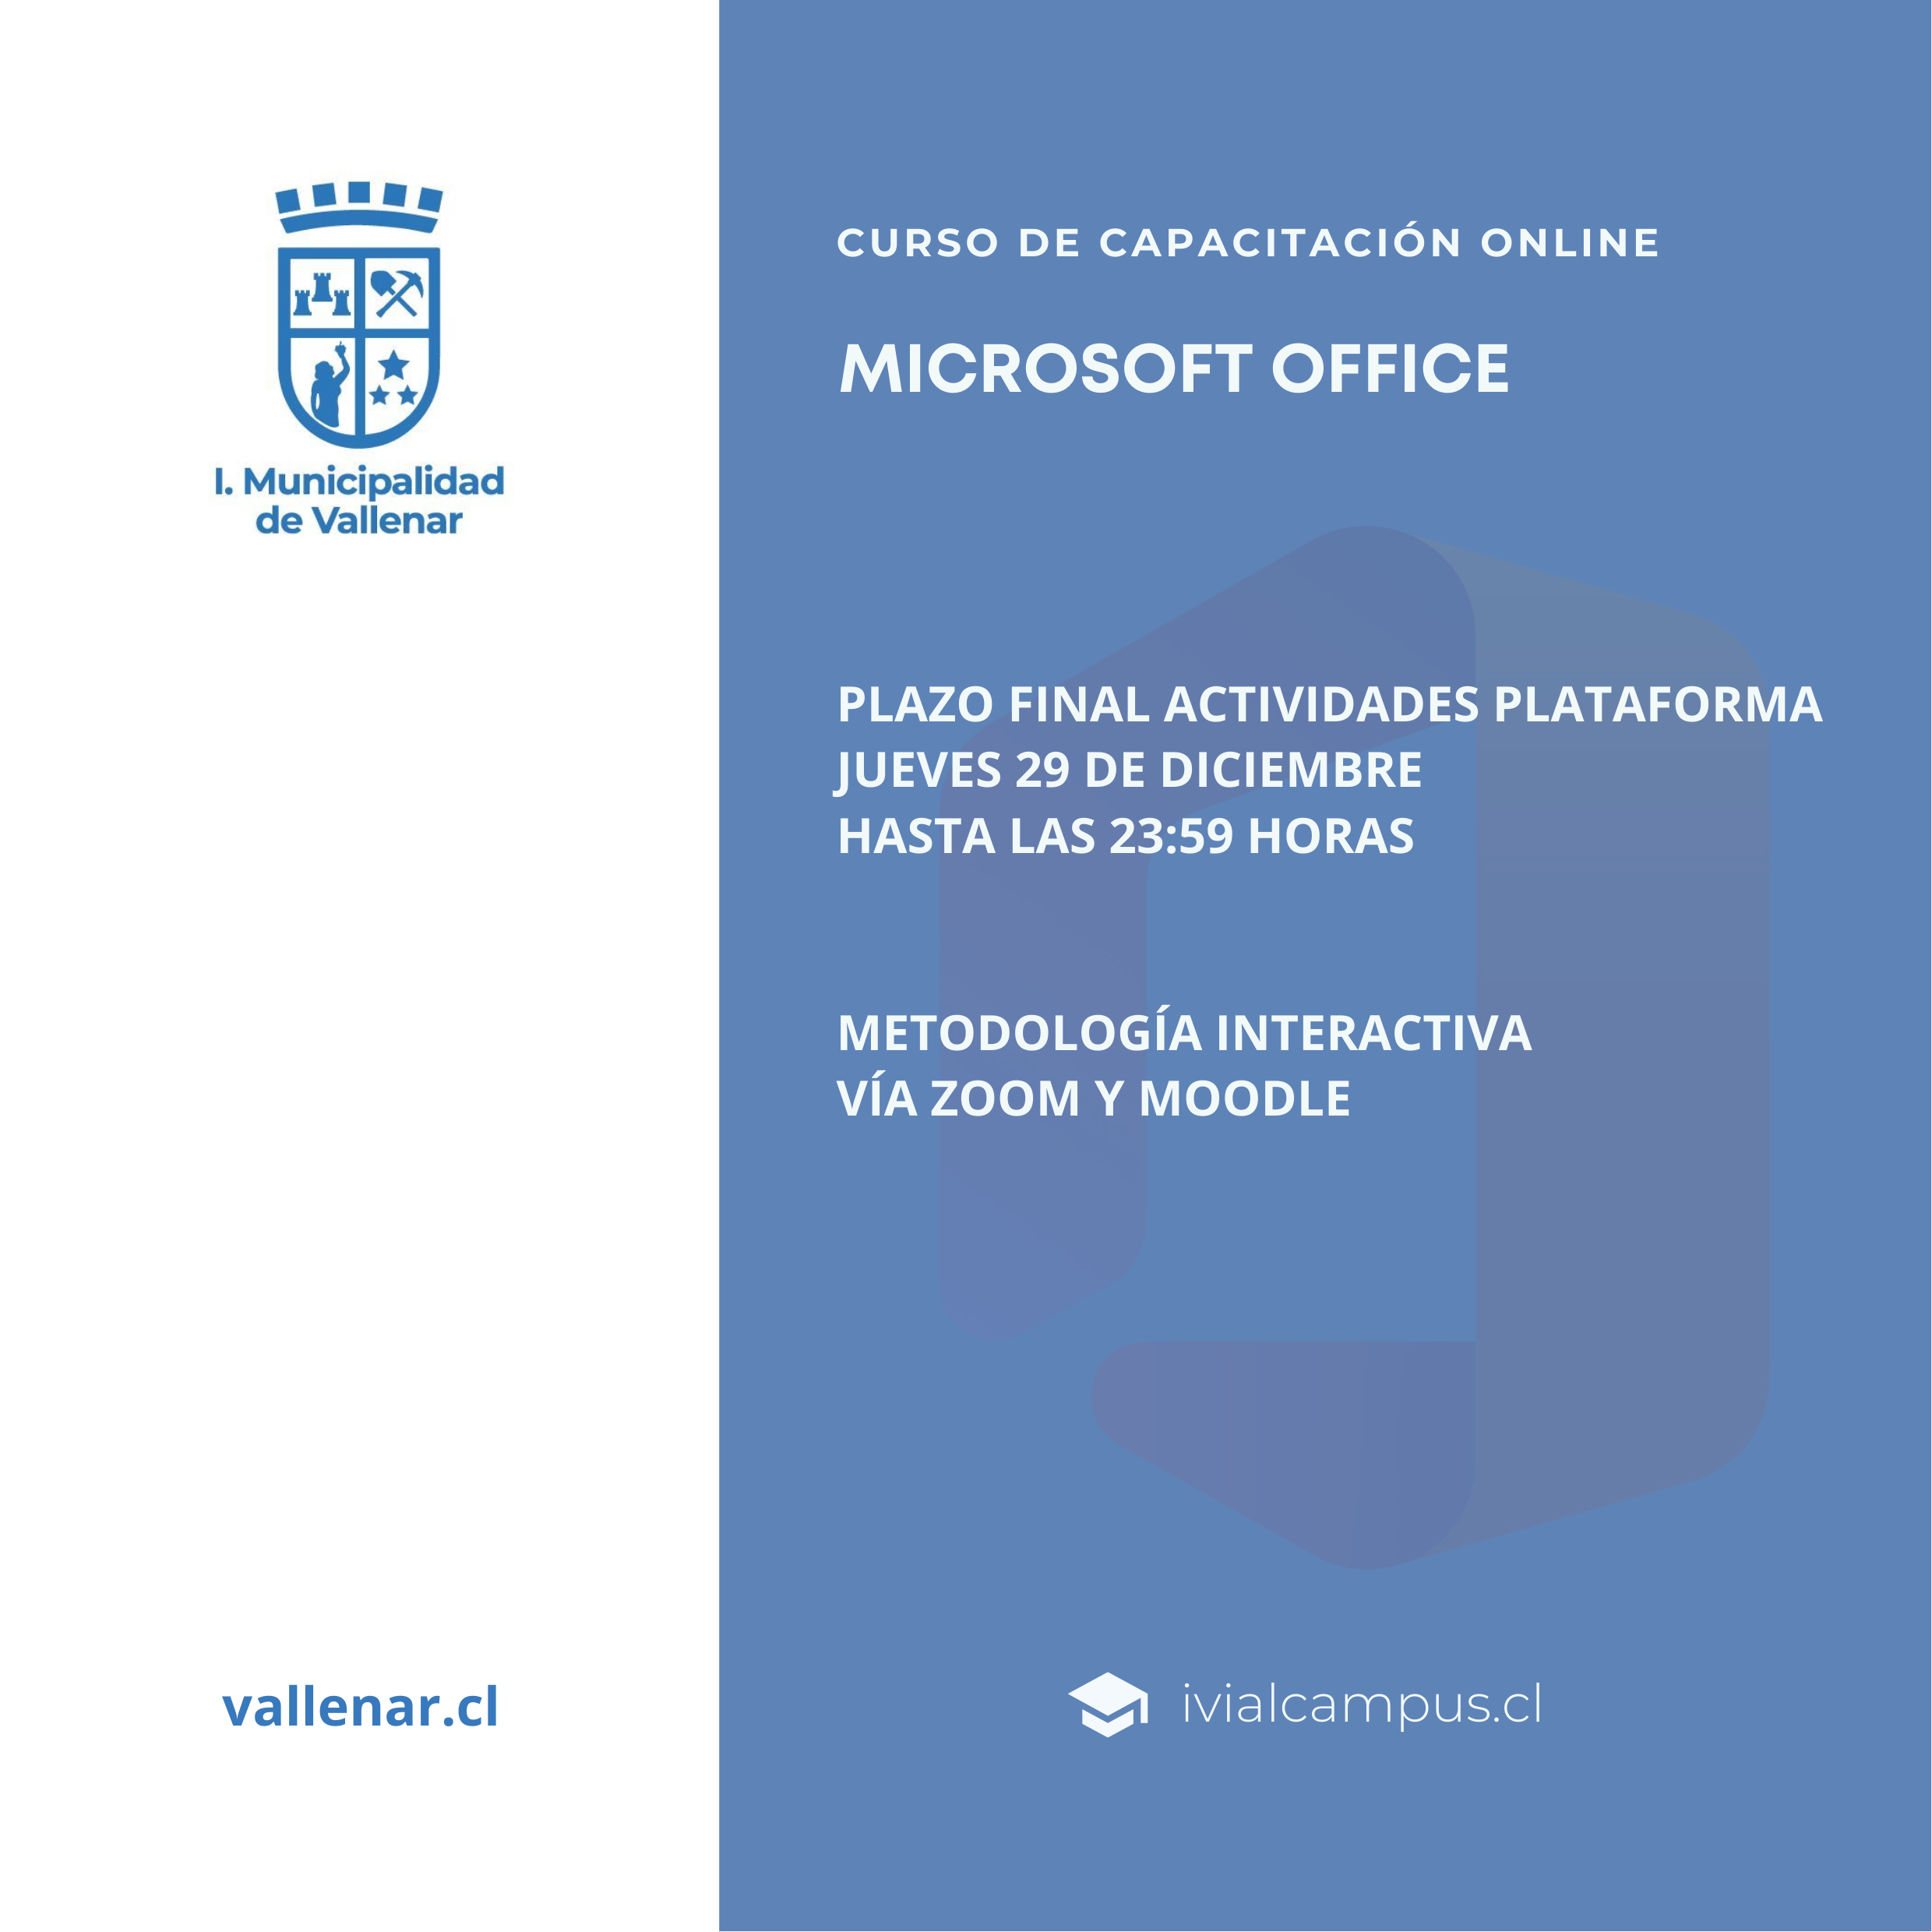 I. MUNICIPALIDAD DE VALLENAR: Microsoft Office